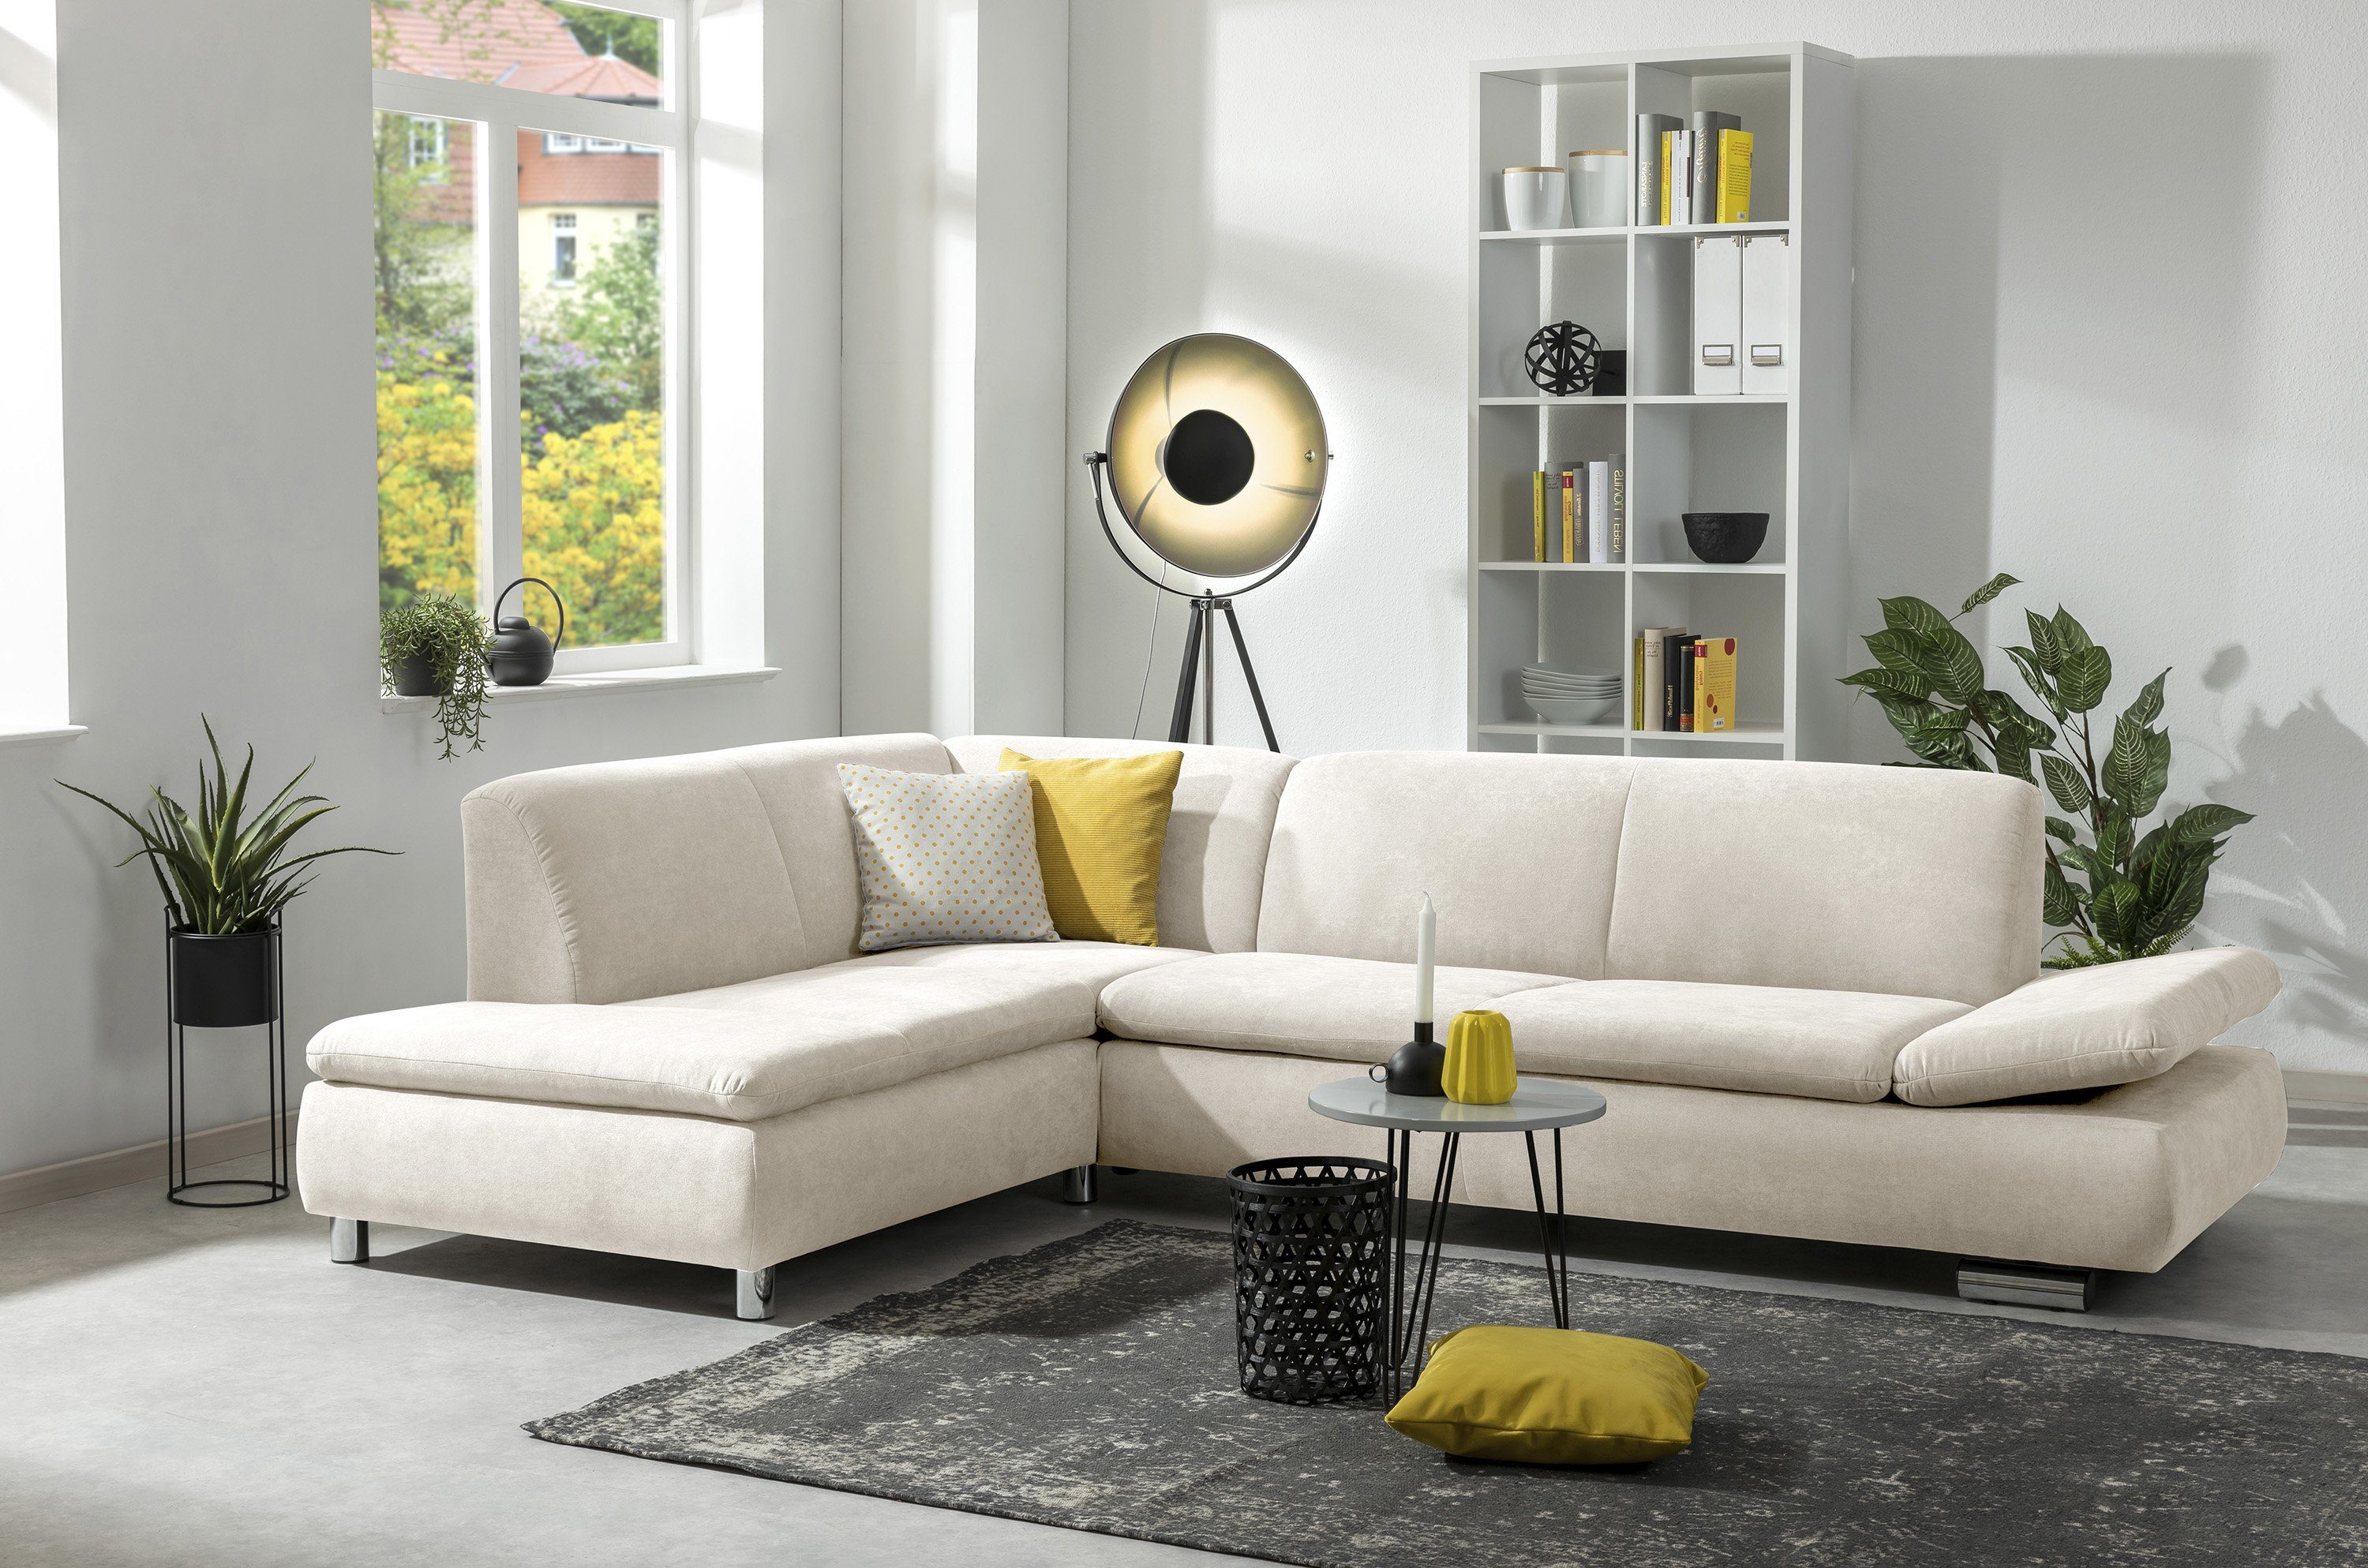 Max Winzer® Ecksofa Terrence Ecksofa links mit Sofa 2,5-Sitzer rechts Flachgewebe beige, 1 Stück, Made in Germany